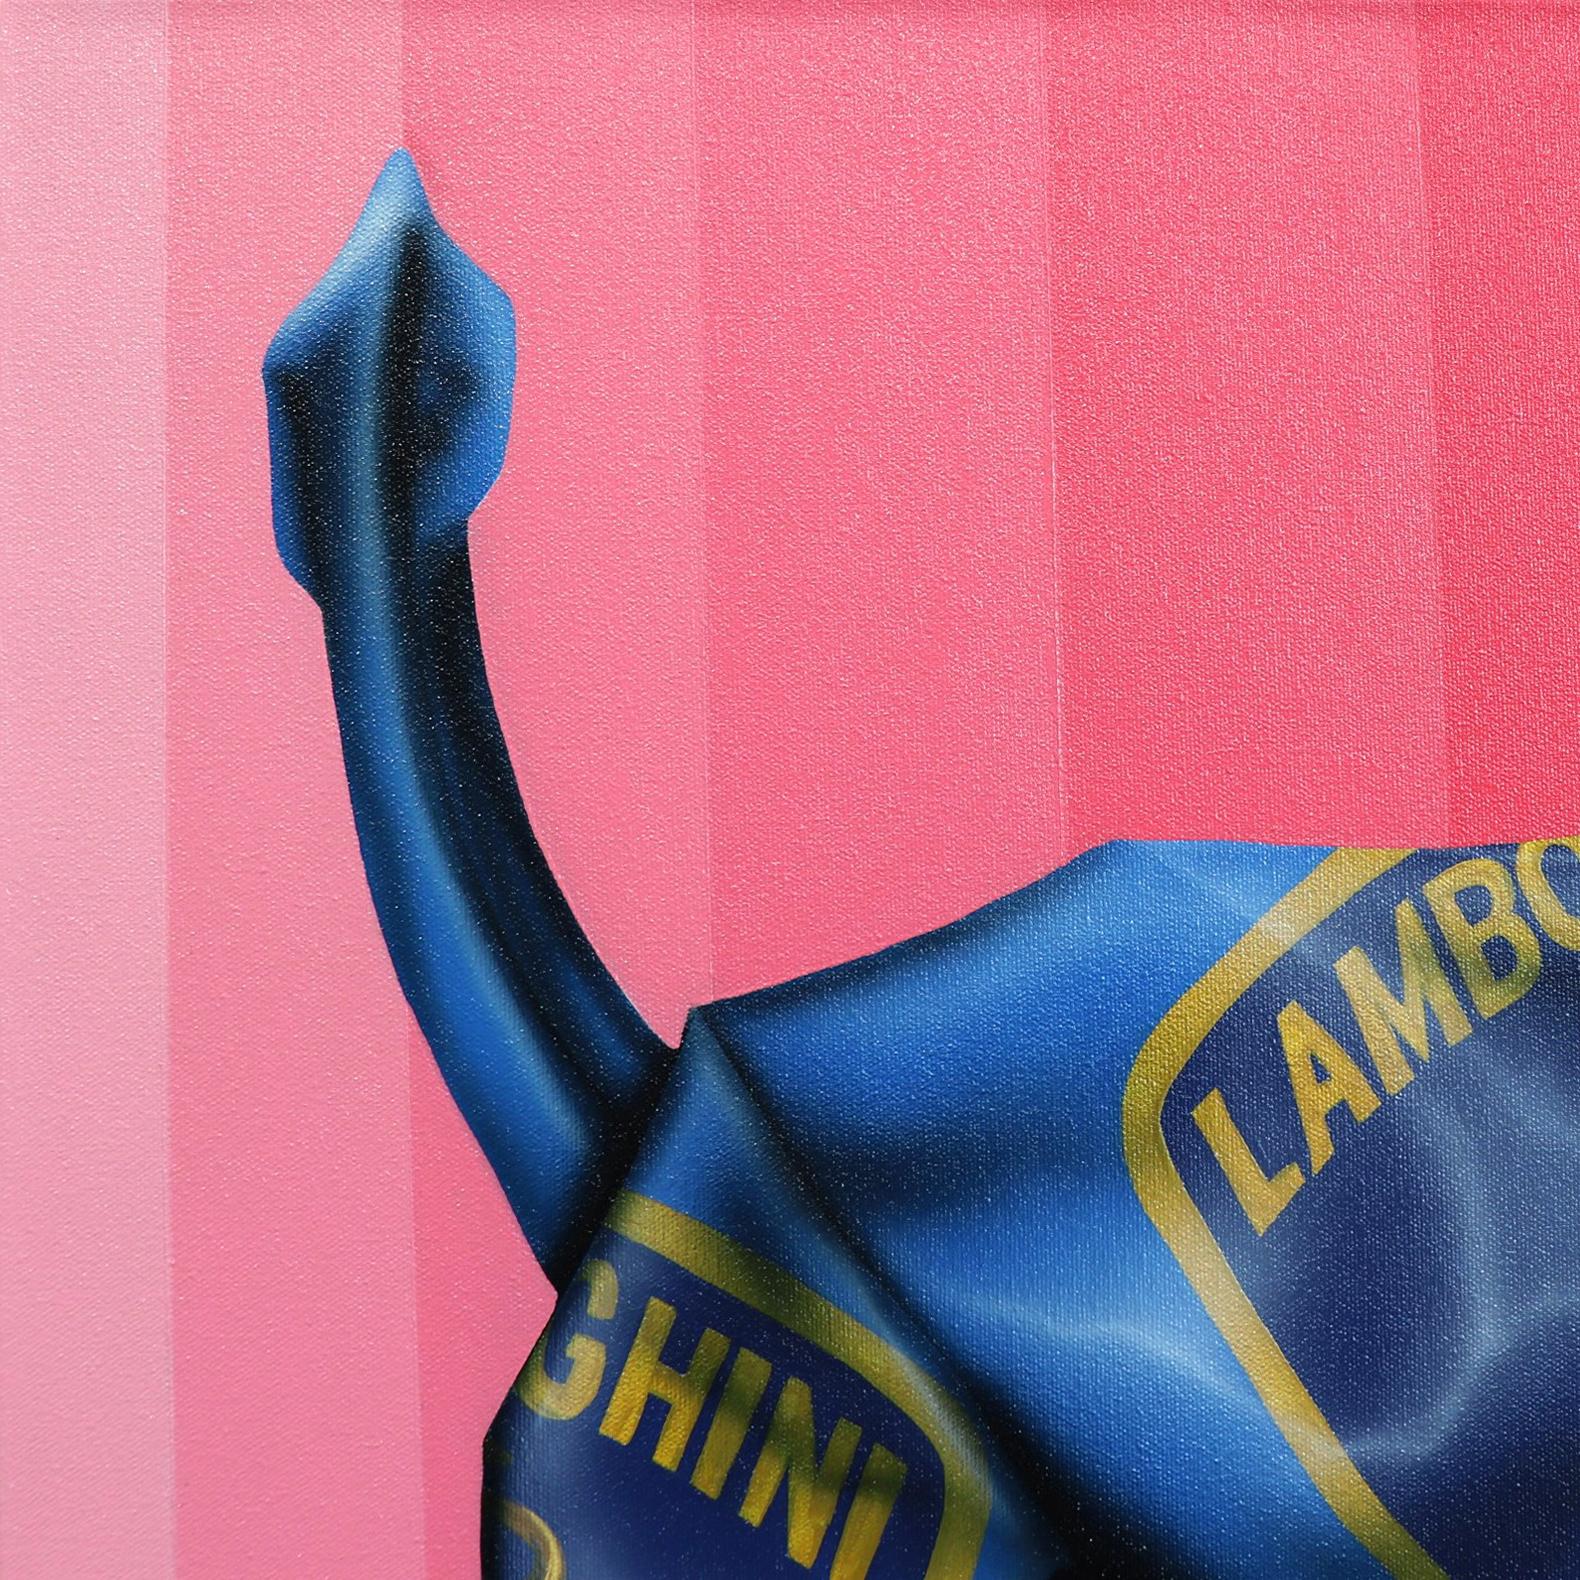 Honor and Lambo - Pop Art Painting by Emilio Rama